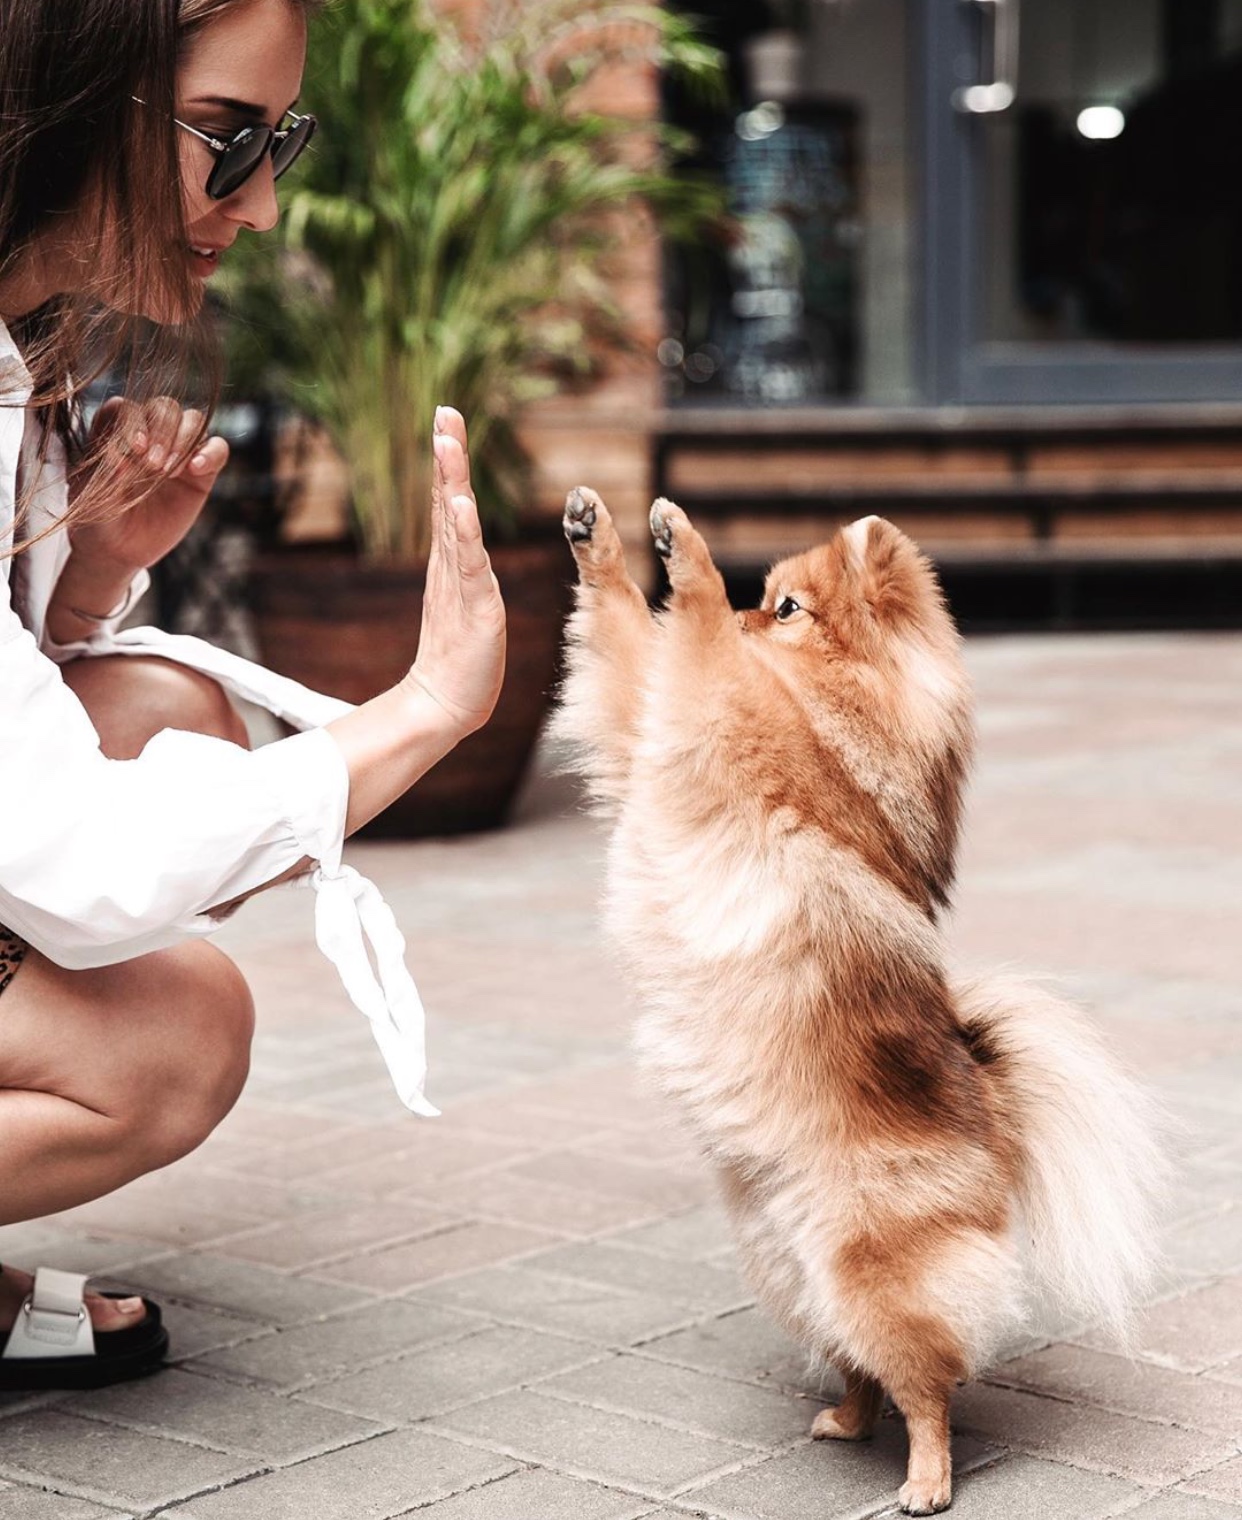 woman high-five-ing a Pomeranian